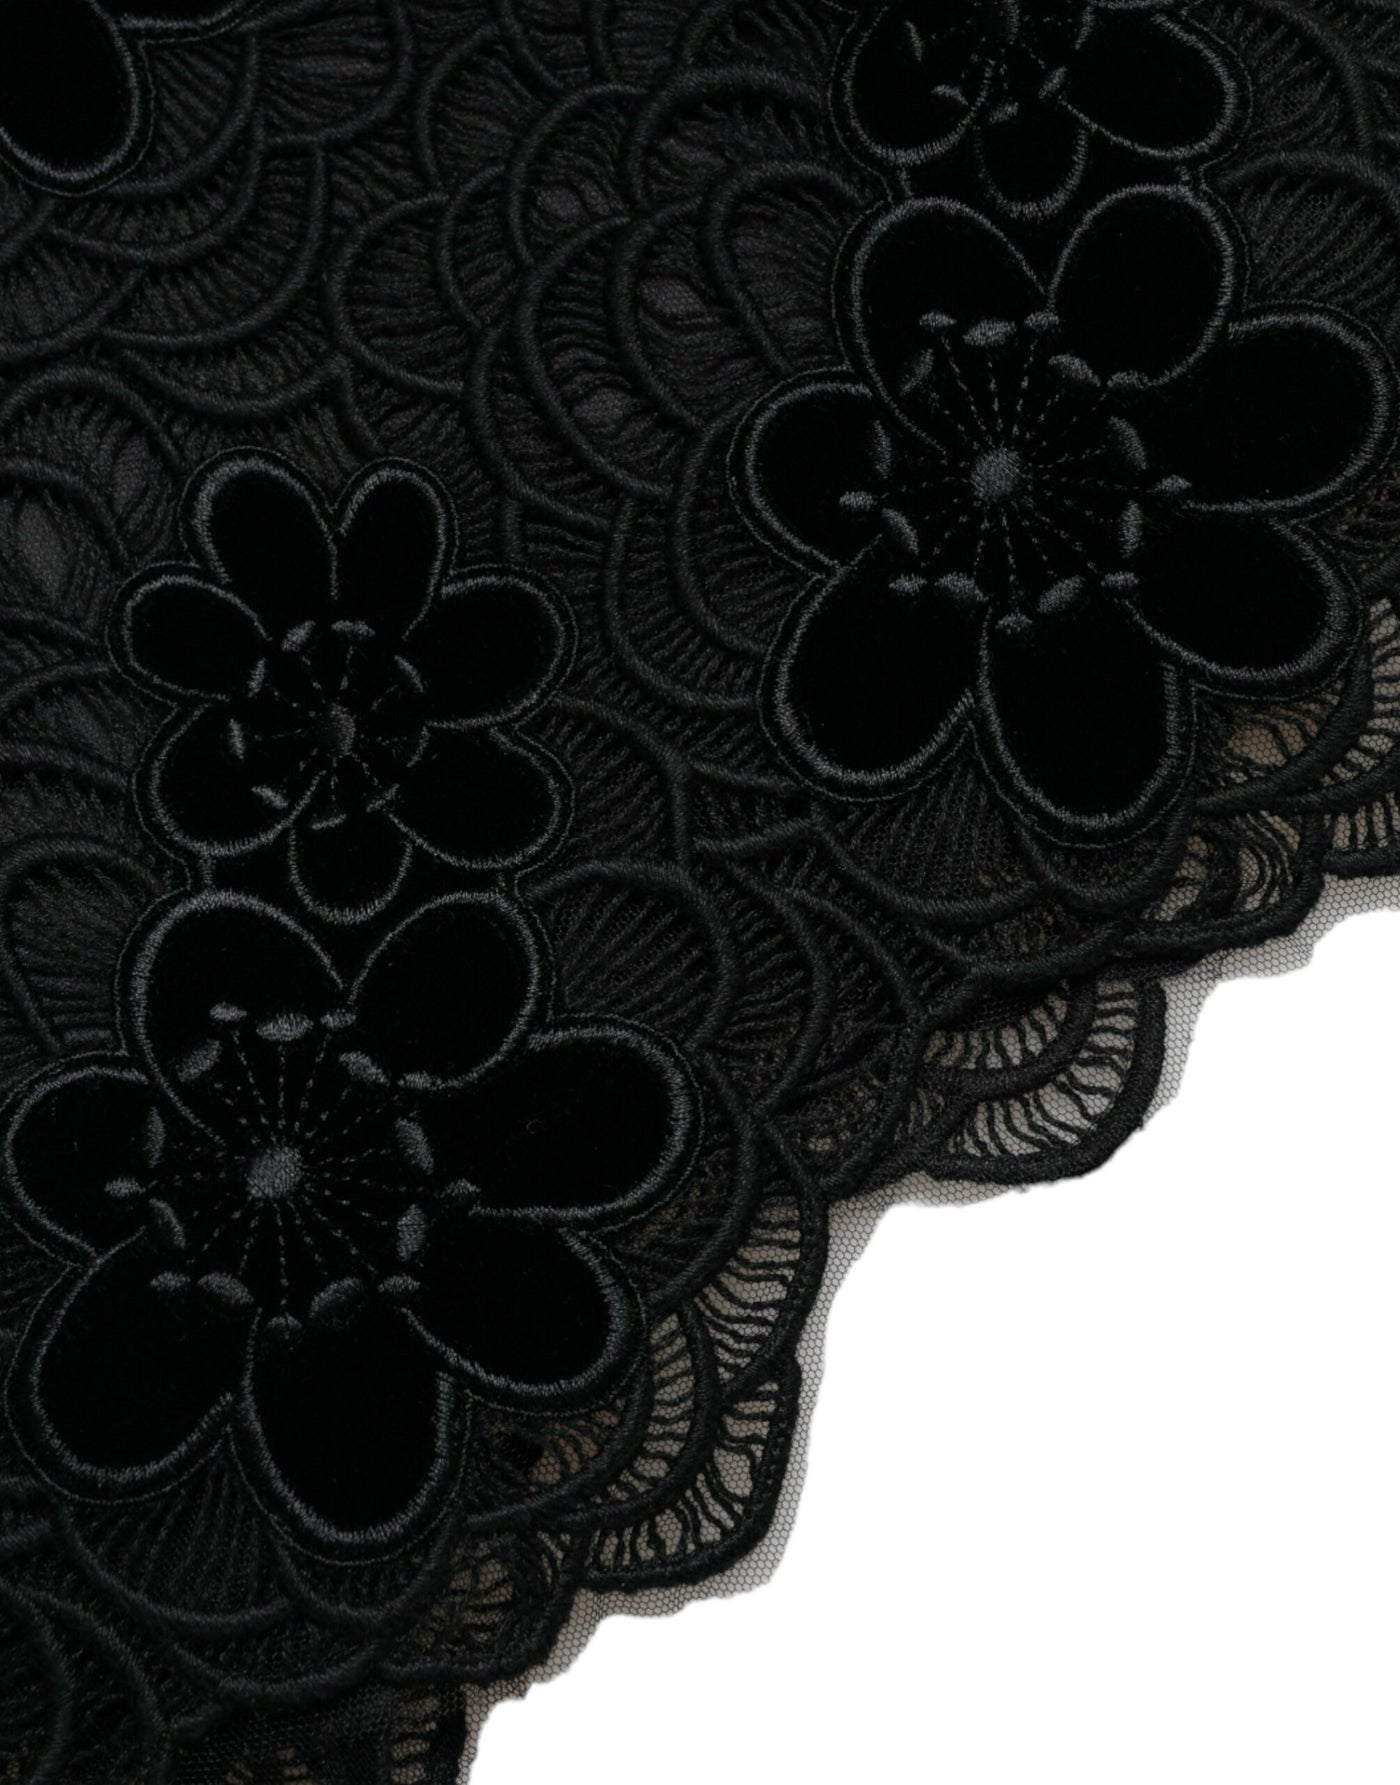 Dolce & Gabbana Black Floral Lace Cotton Bodycon Dress